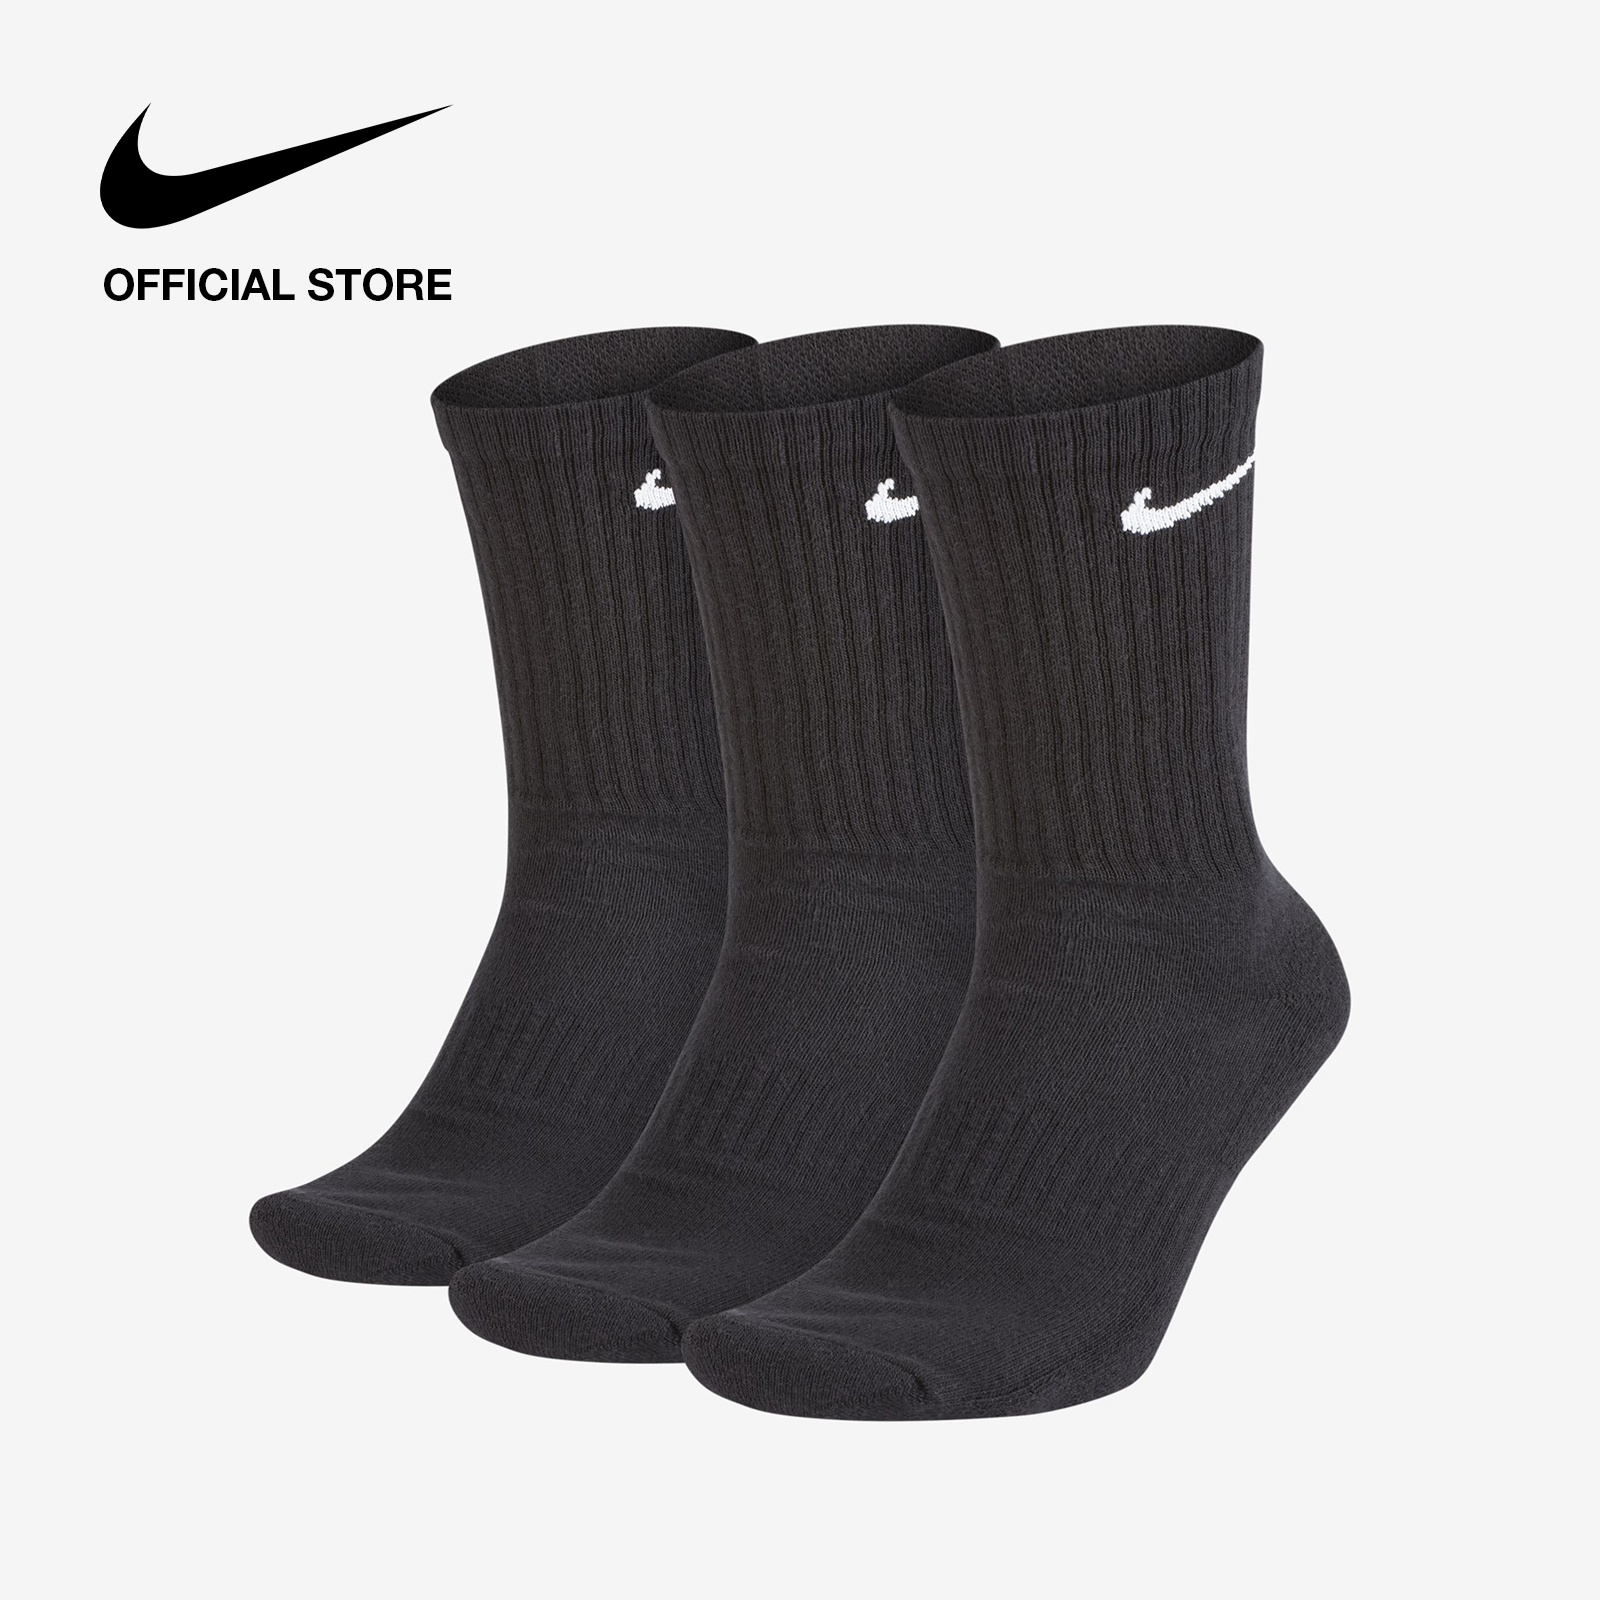 Nike Unisex Everyday Cushioned Training Crew Socks (3 Pairs) - Black ไนกี้ ถุงเท้าเทรนนิ่งหุ้มข้อยูนิเซ็กส์ เอเวอรี่เดย์ คุชชั่น (3 คู่) - สีดำ